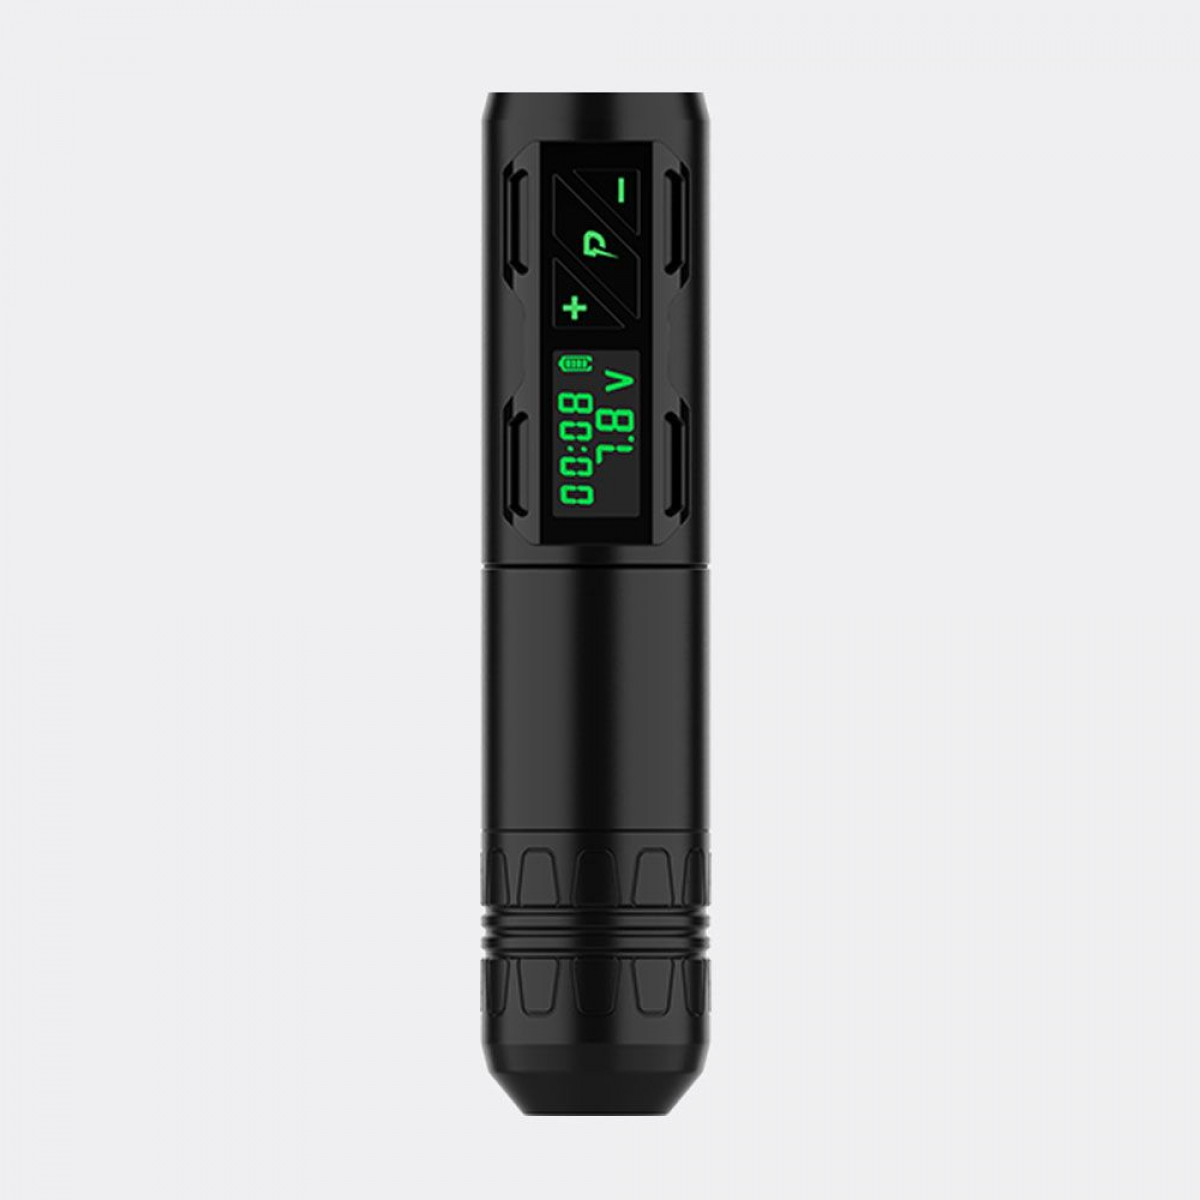 EZ Portex Generation 2S (P2S) Wireless Battery Tattoo Pen Machine беспроводная тату машинка (Pen / Black)